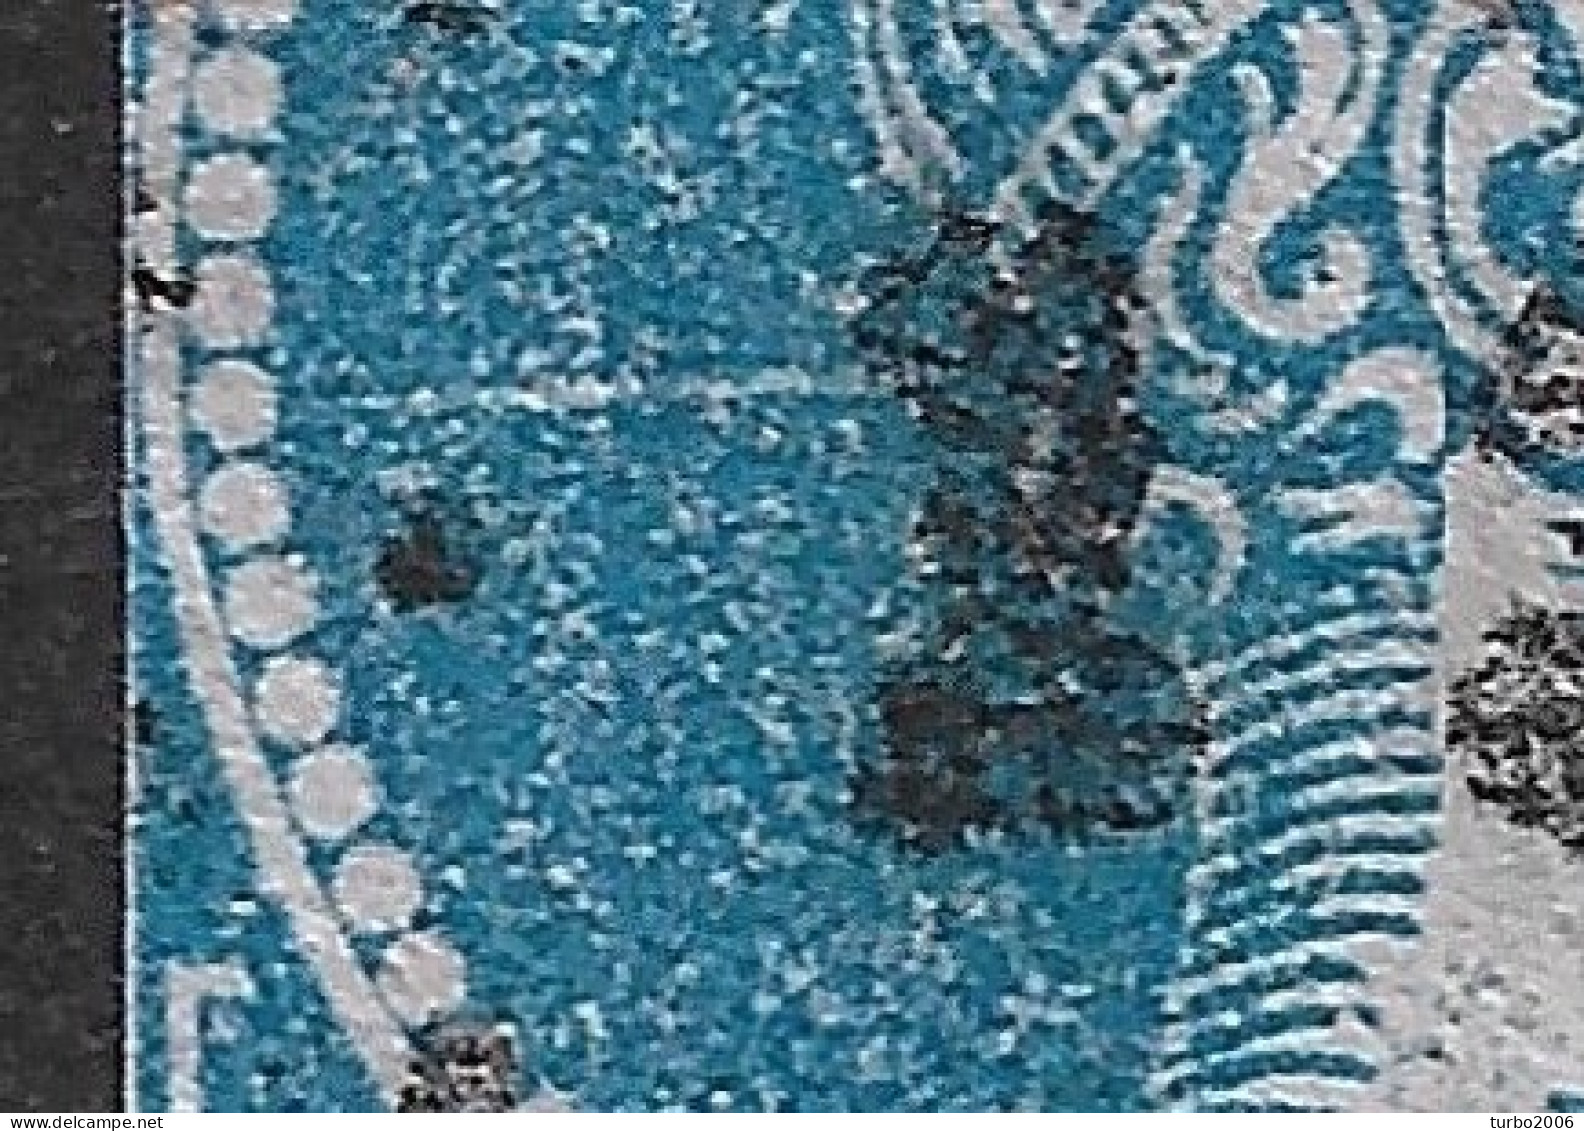 GREECE Plateflaw White Line (20F20) In 1868-69 Large Hermes Head Cleaned Plates Issue 20 L Sky Blue Vl. 39 / H 27 A - Variétés Et Curiosités